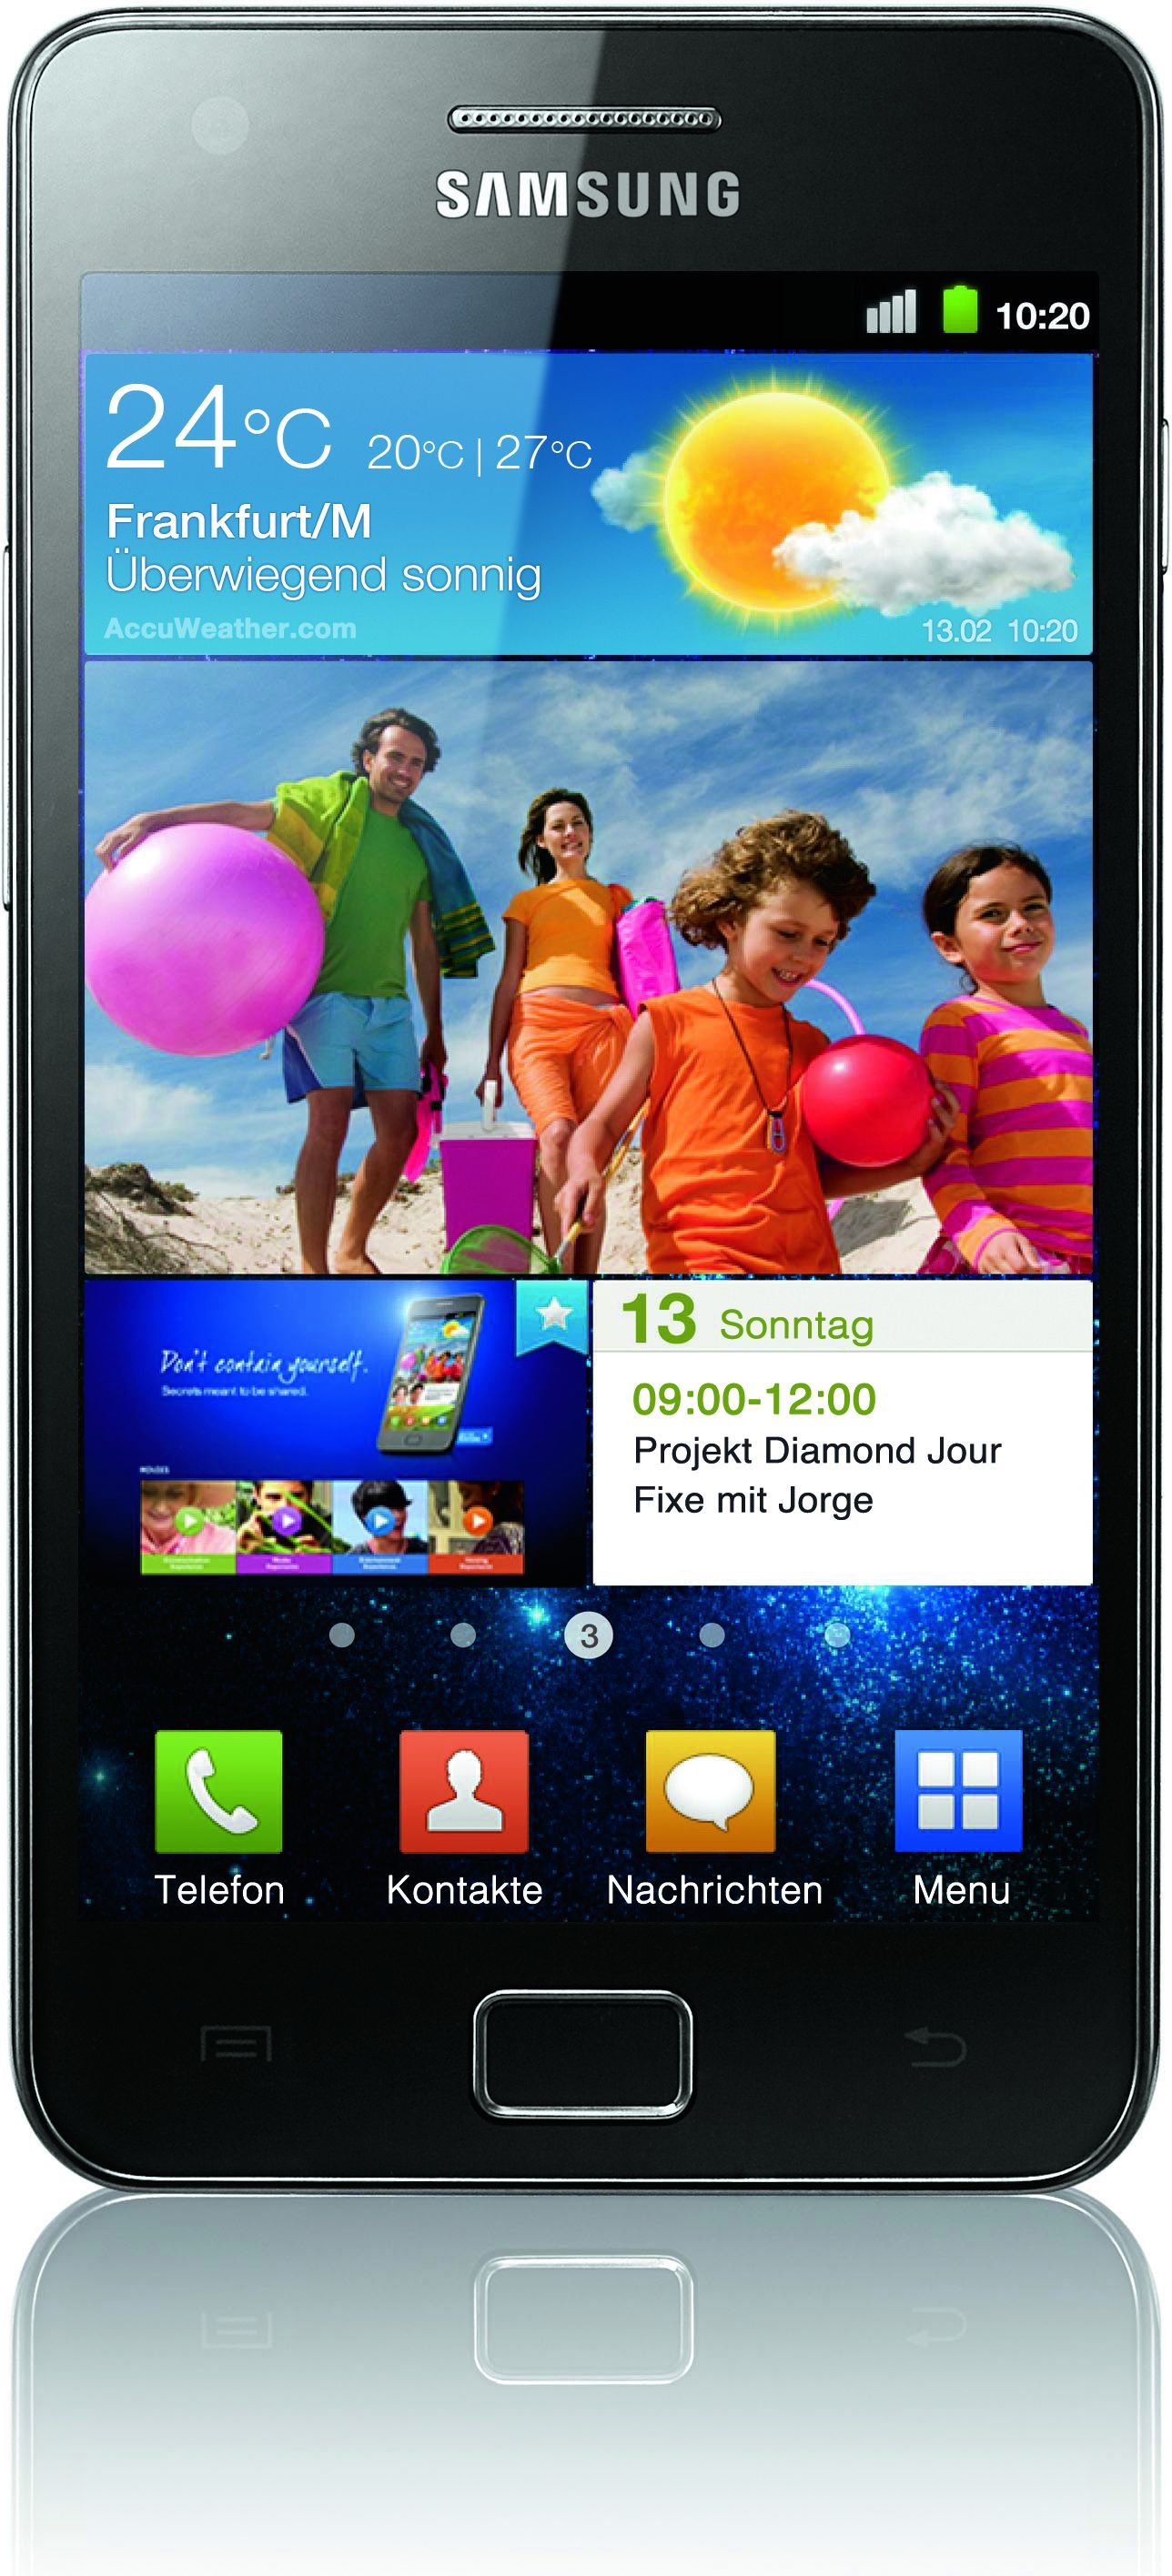 самсунг галакси s4 цена Samsung Galaxy S - цена от 5800 руб